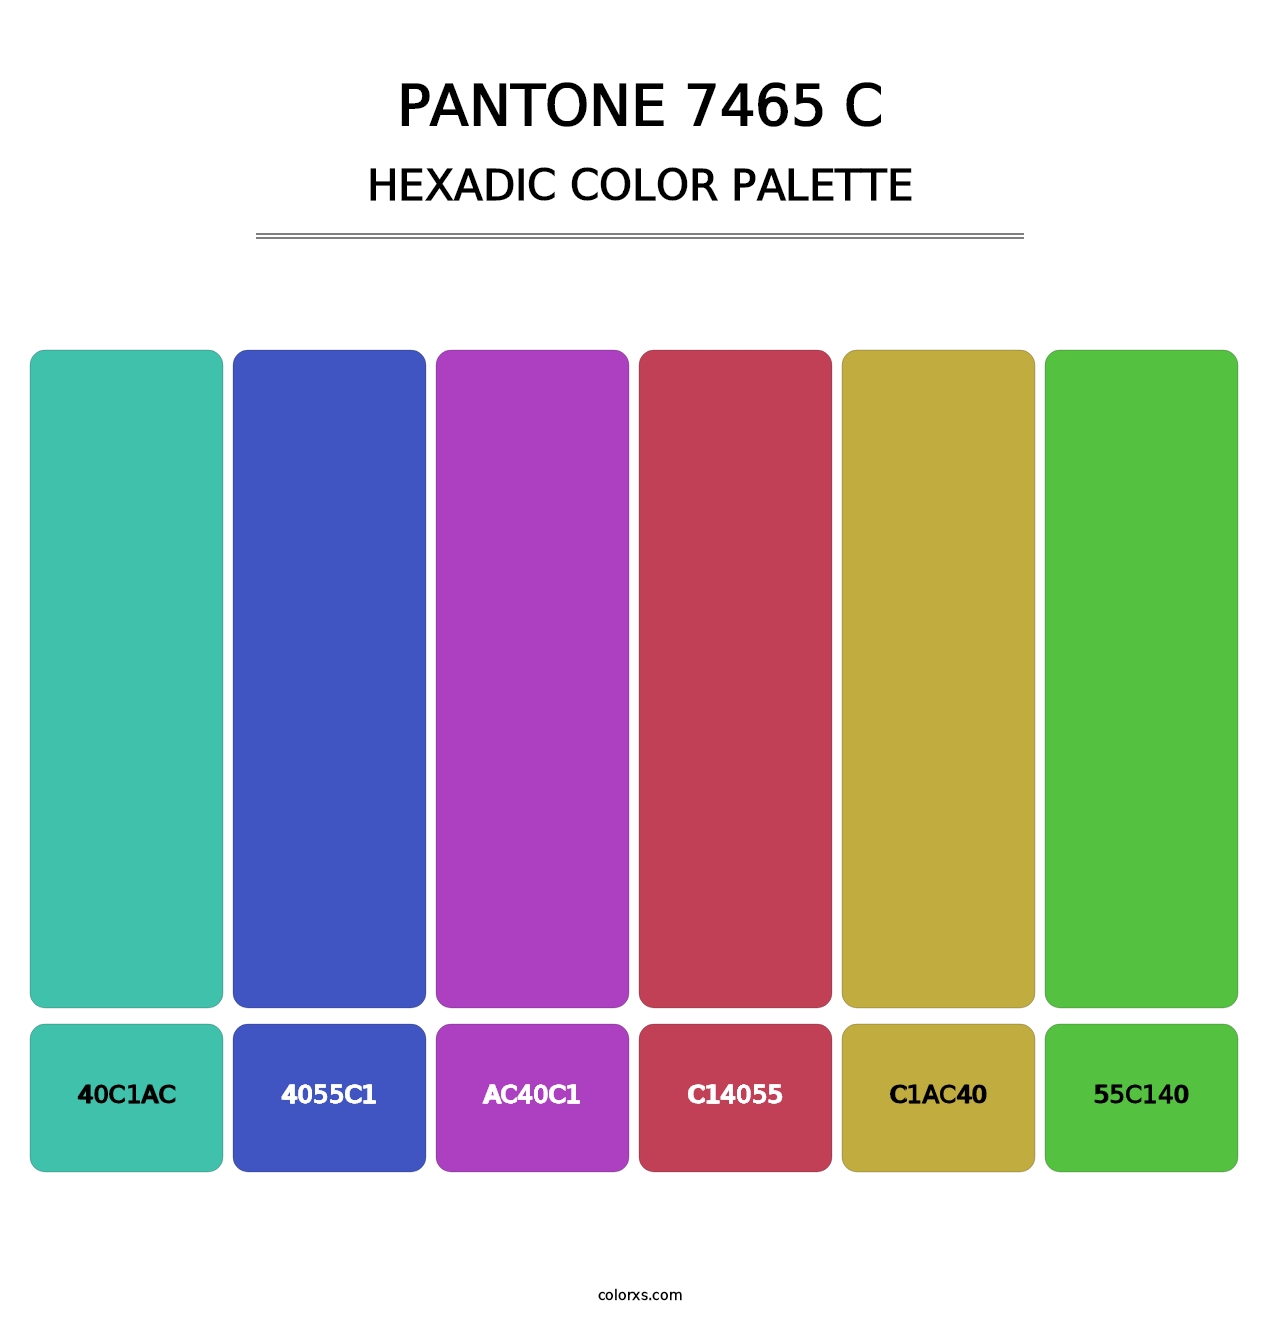 PANTONE 7465 C - Hexadic Color Palette